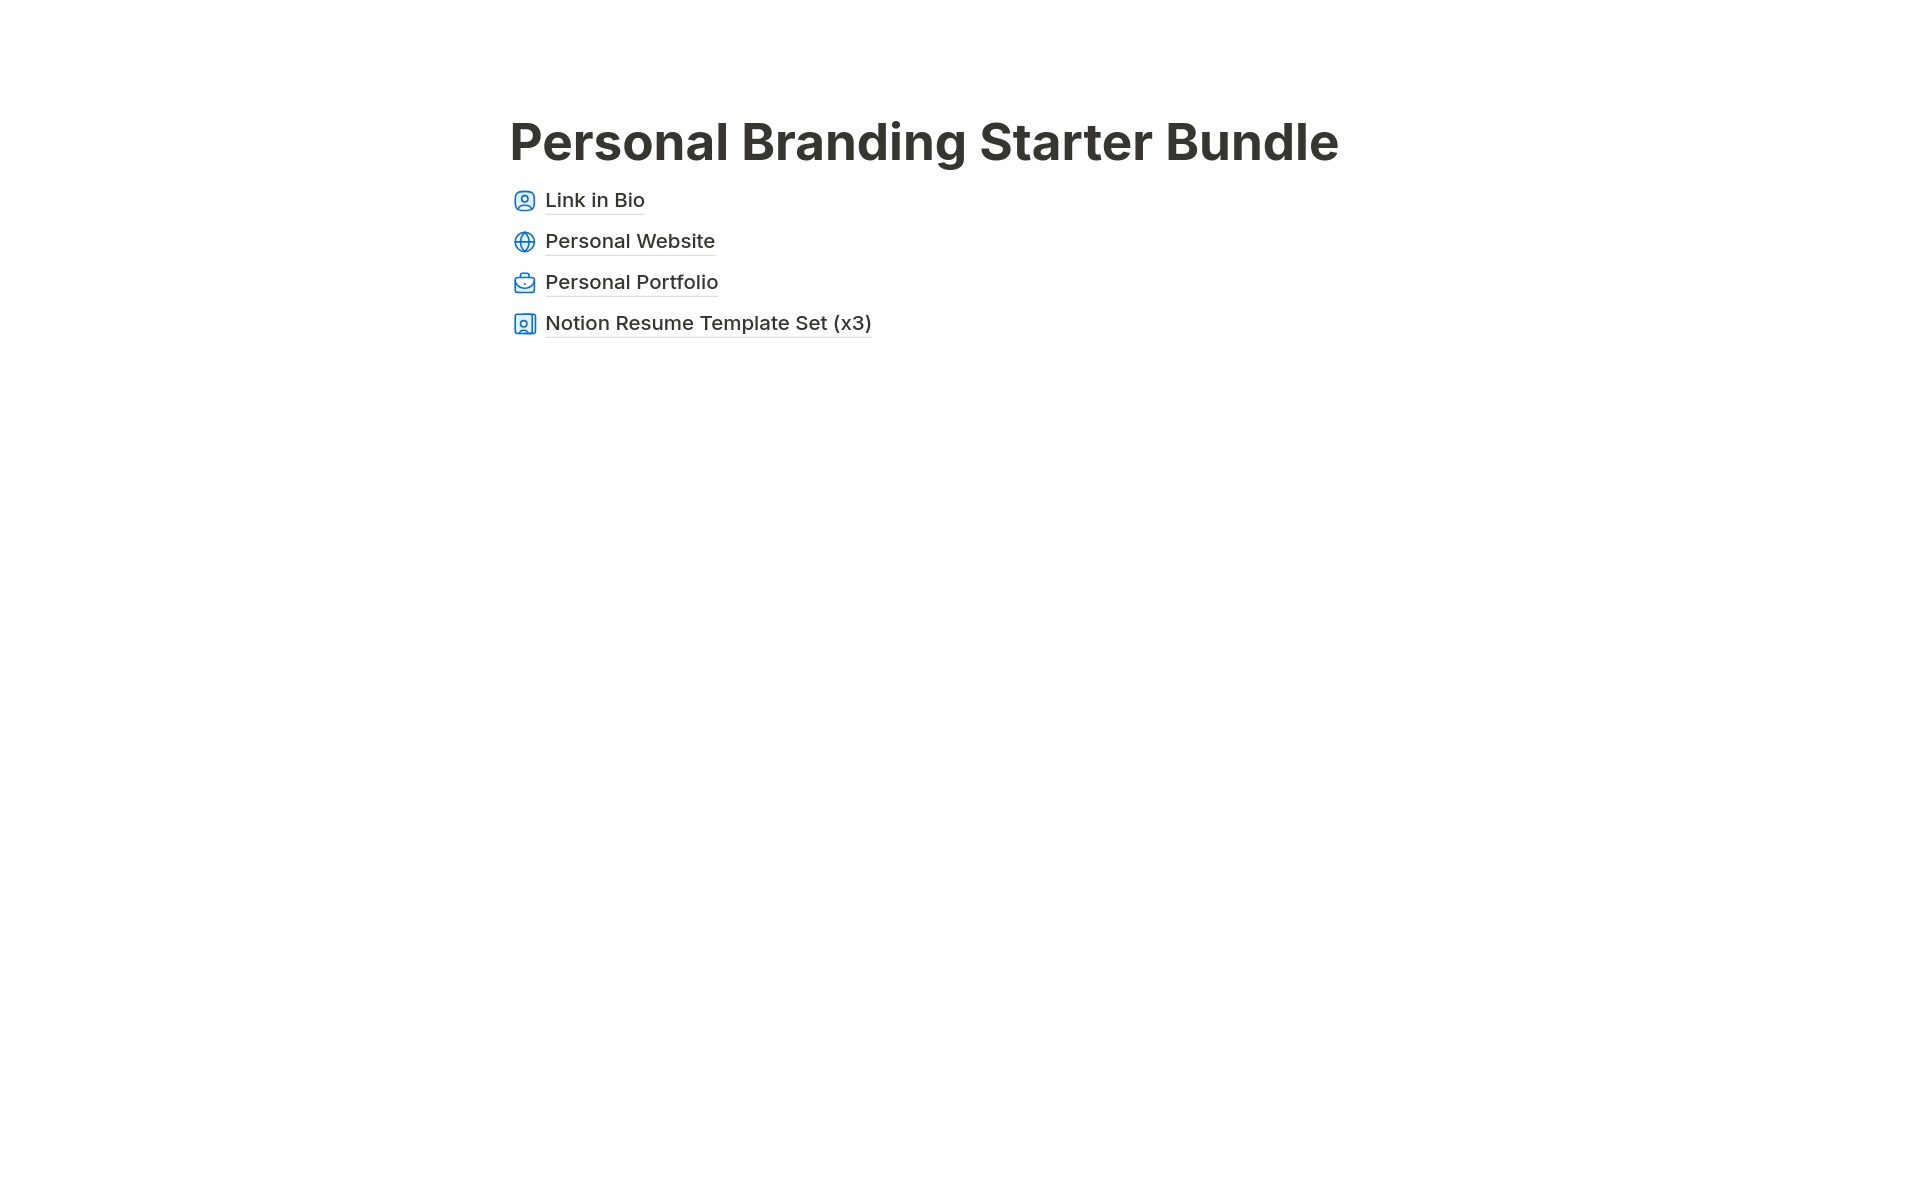 Aperçu du modèle de Personal Branding Starter Bundle